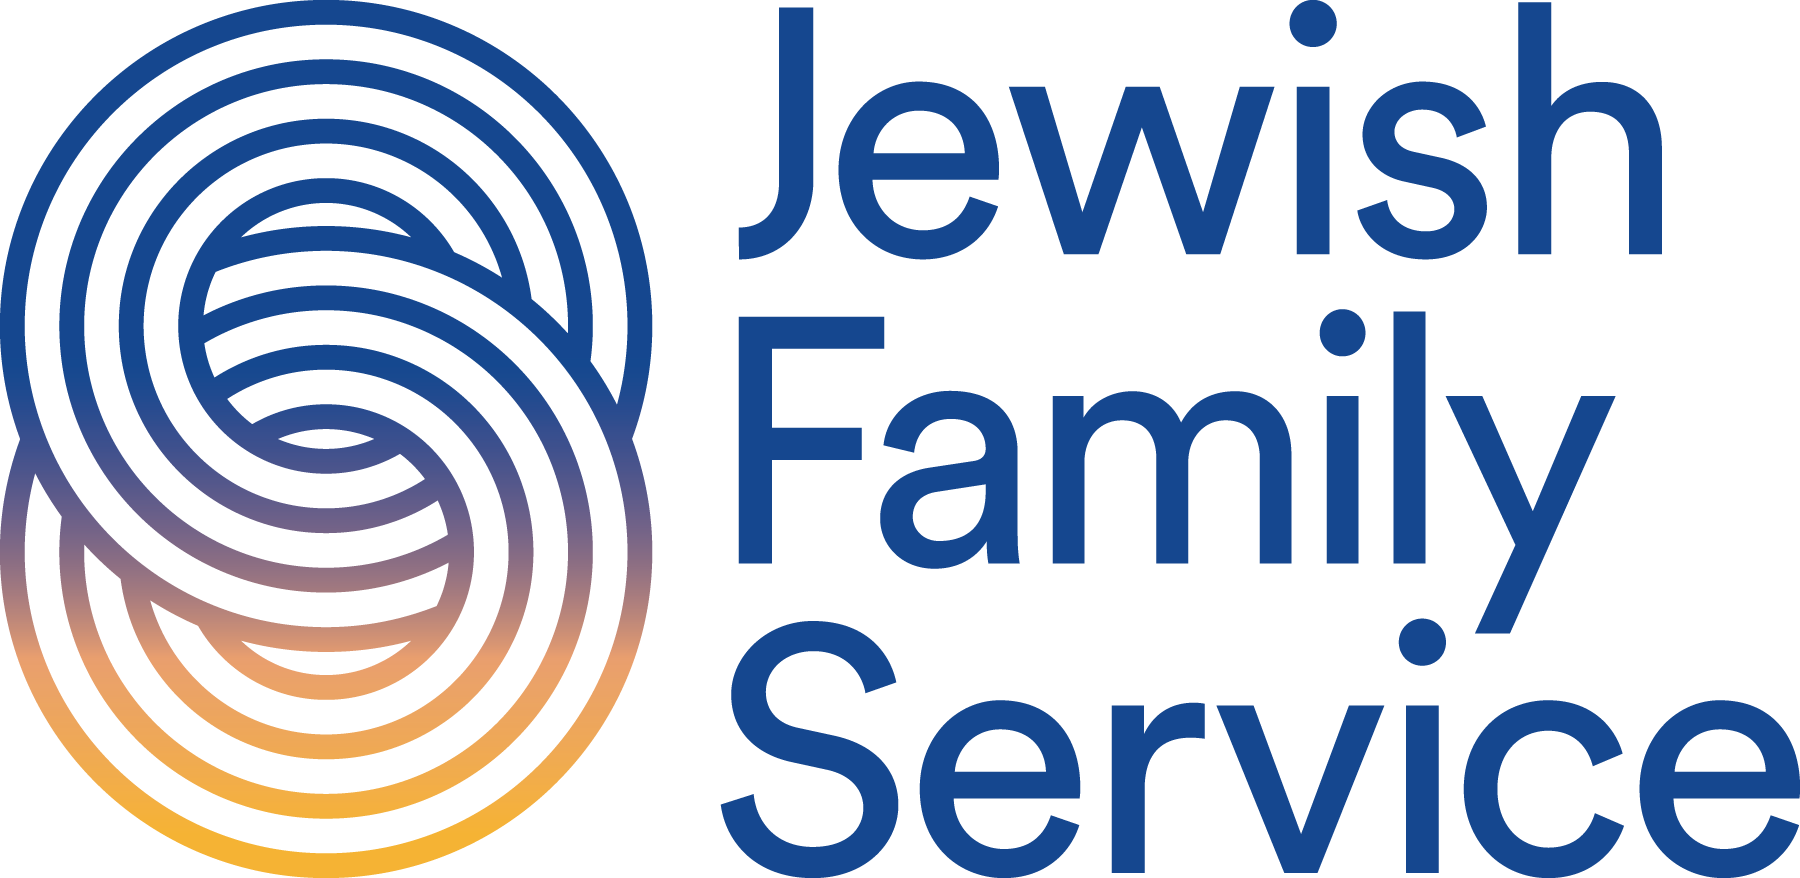 JEWISH FAMILY SERVICE OF COLORADO INC